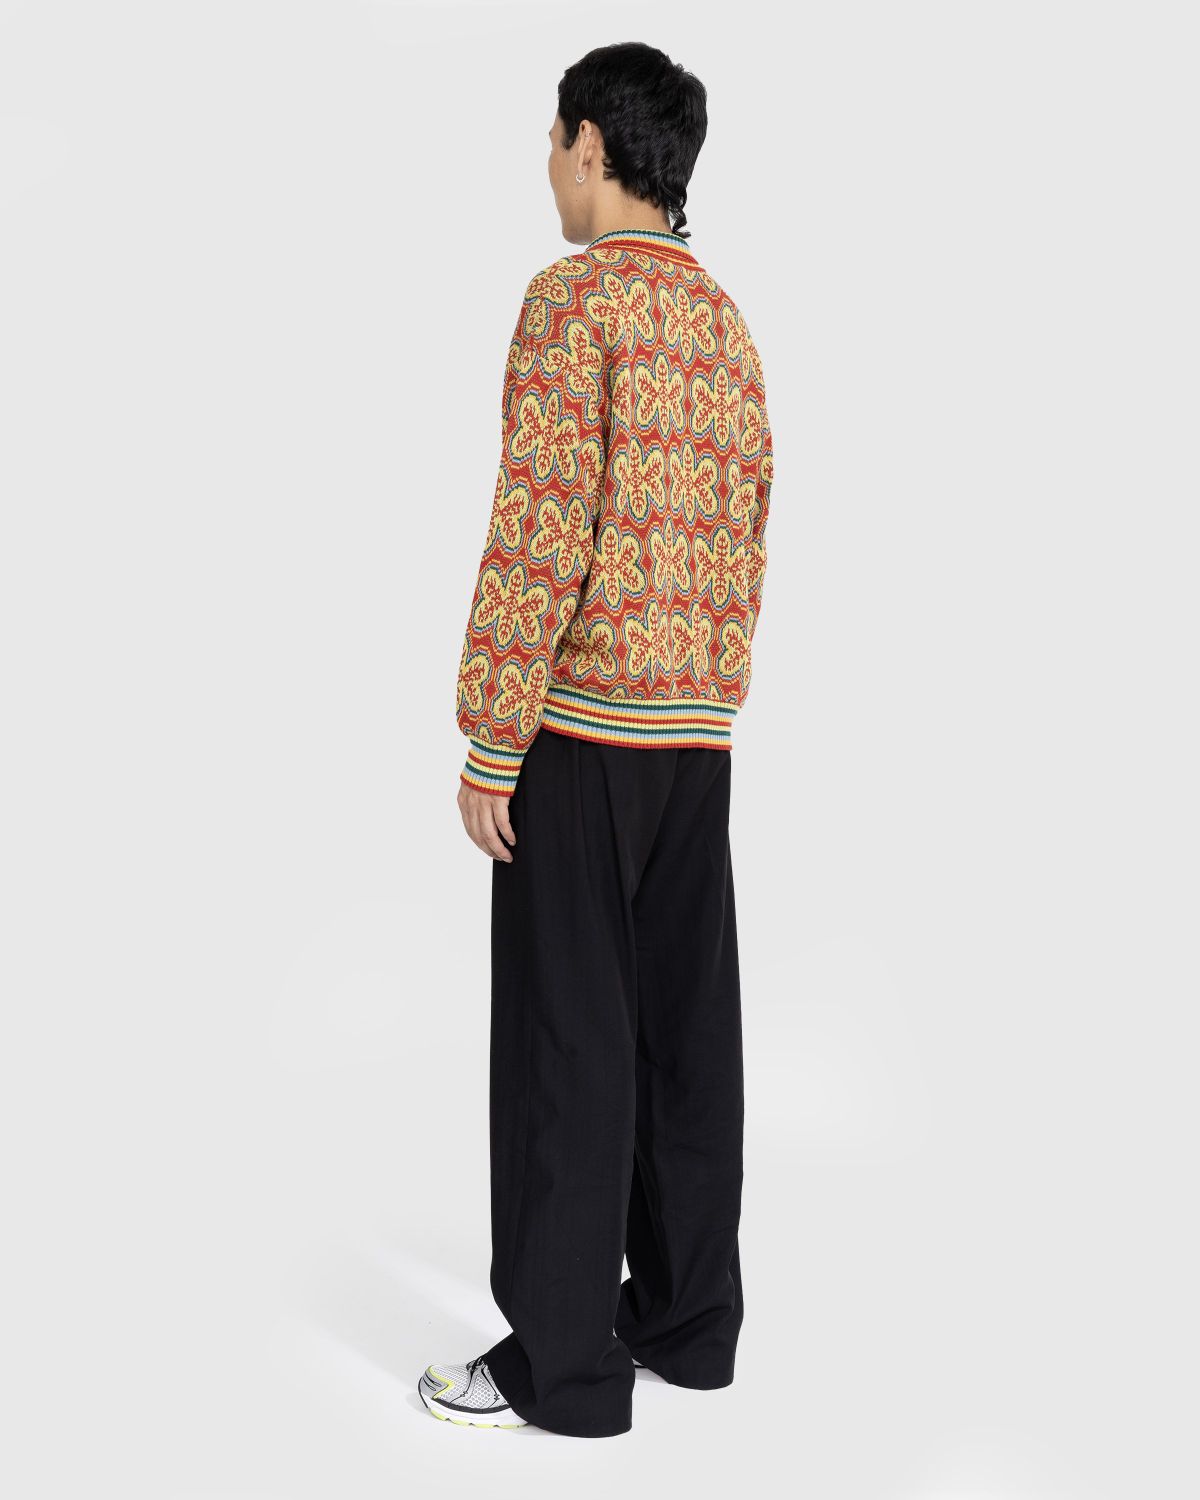 Bode – Dream State Quarter-Zip Sweater Multi - Shirts - Multi - Image 3